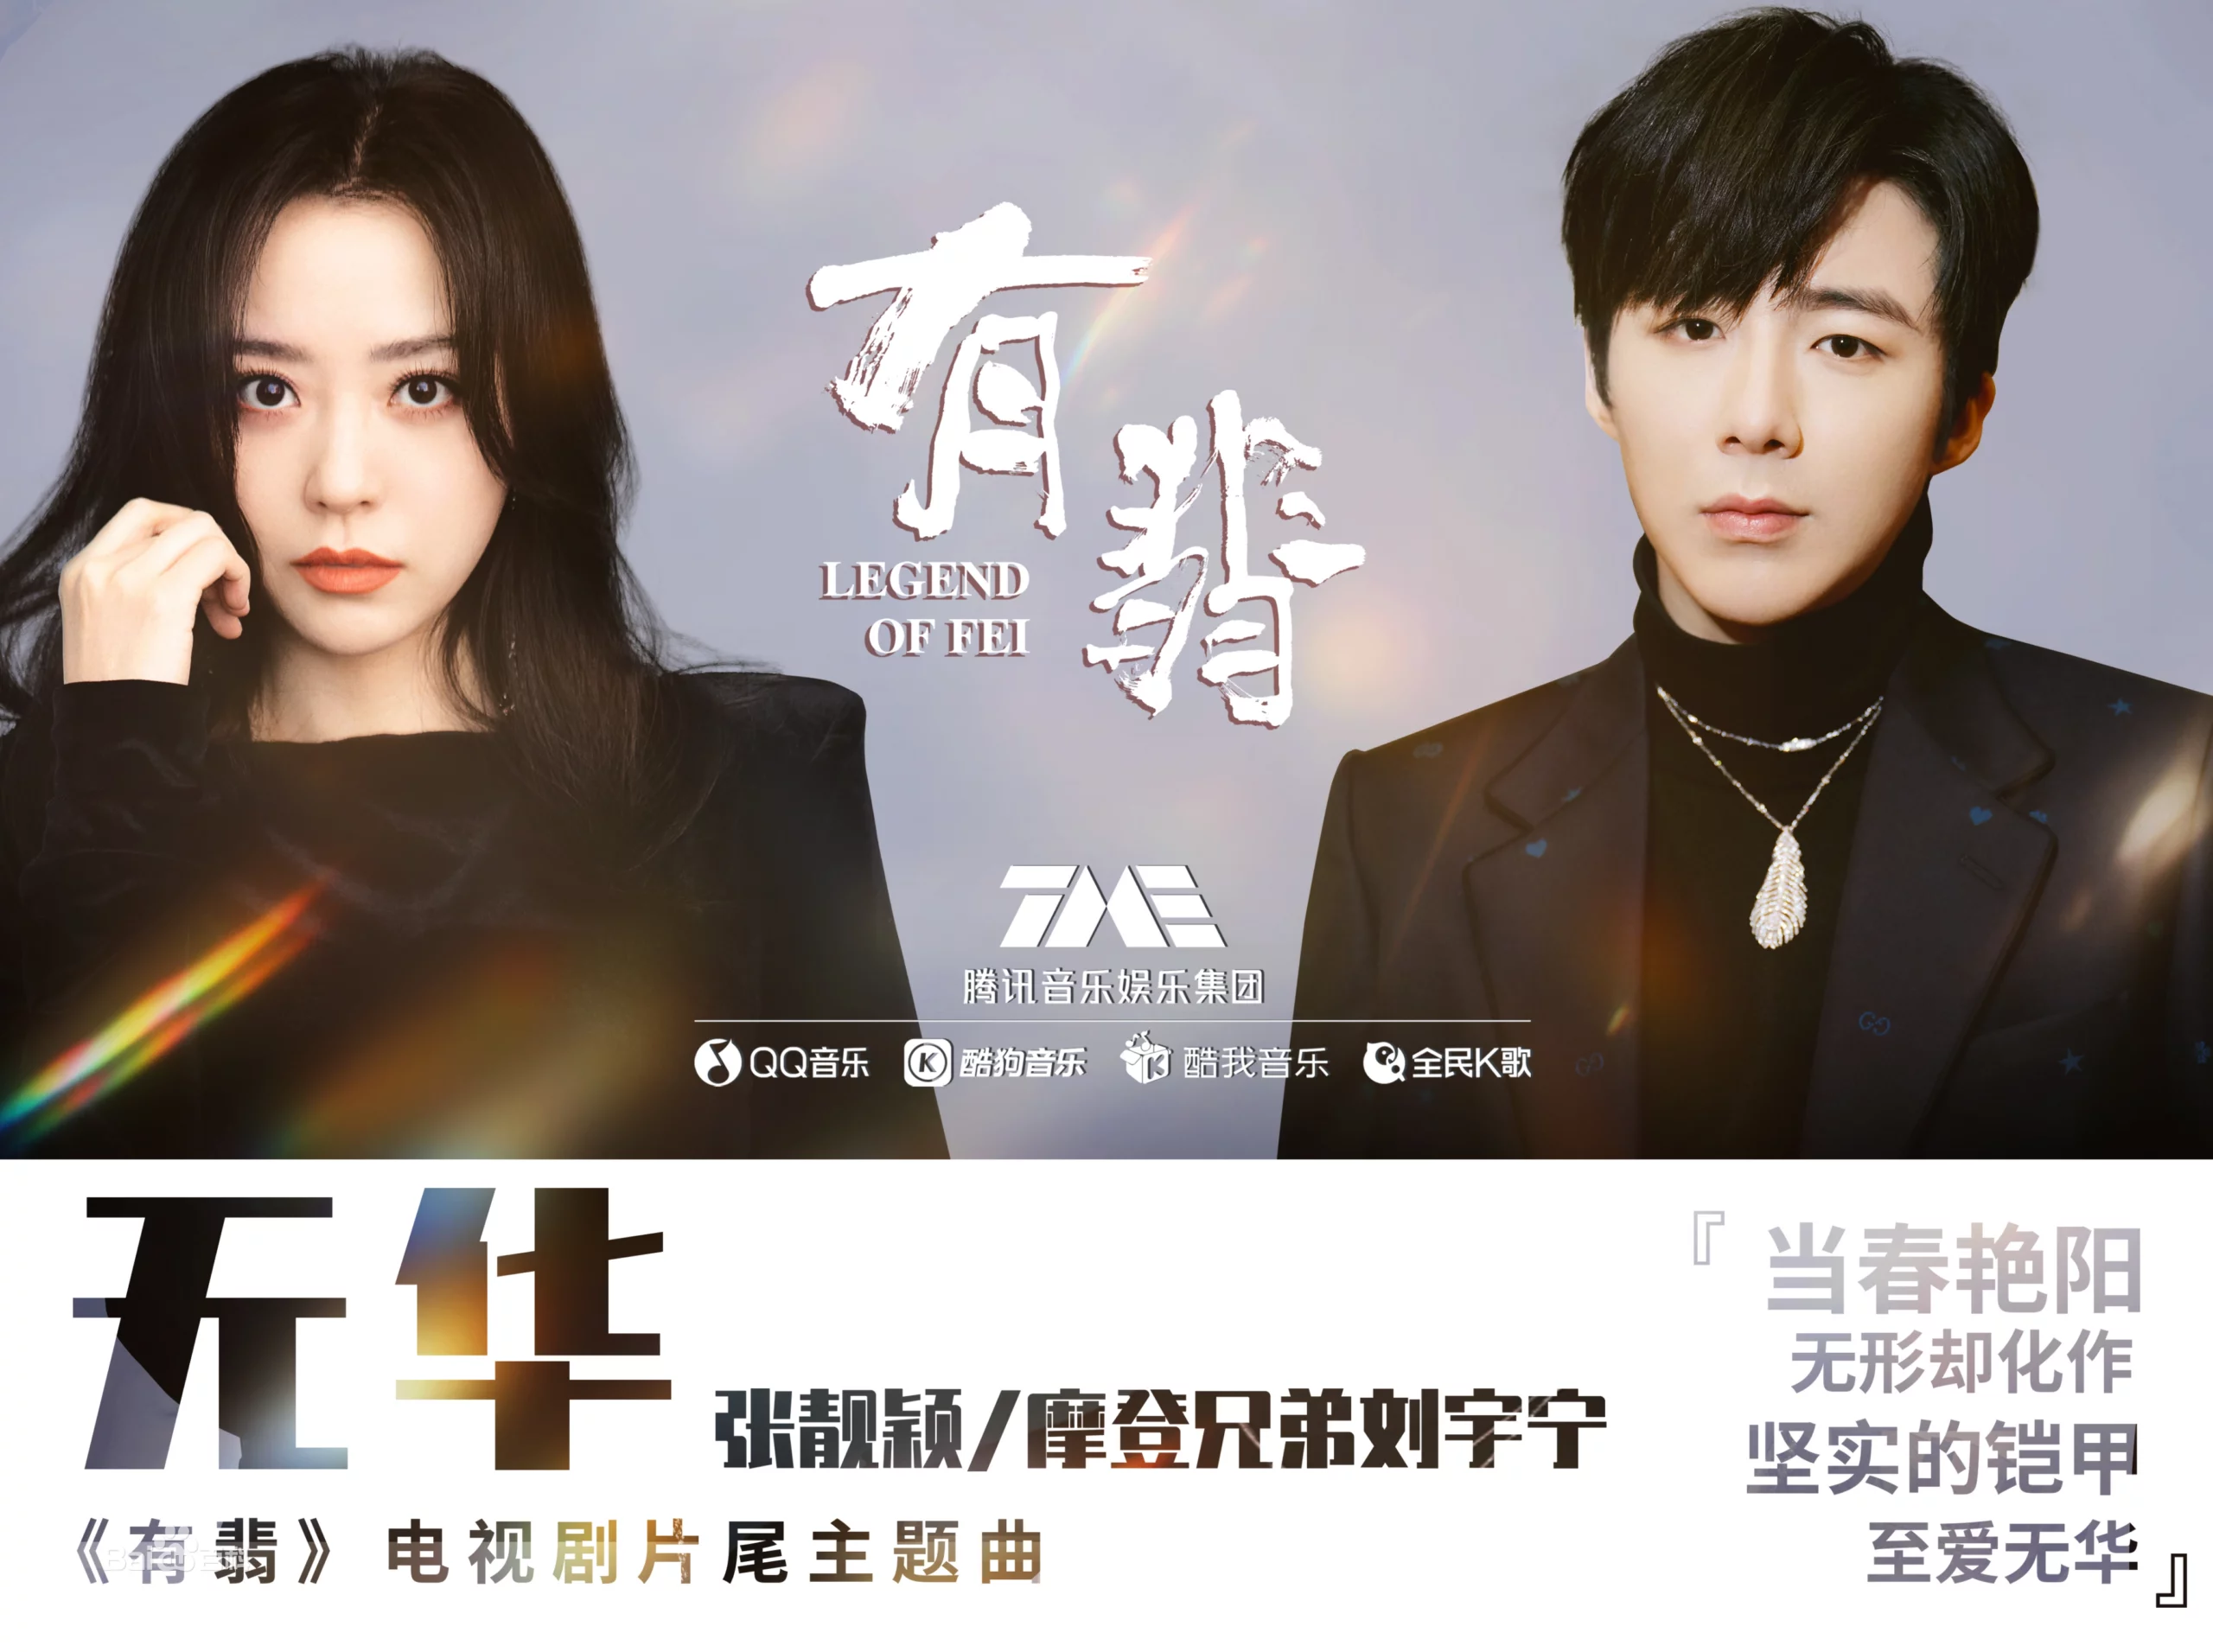 No Extravagance无华(Wu Hua) Legend of Fei OST By Jane Zhang张靓颖 and Liu Yuning刘宇宁